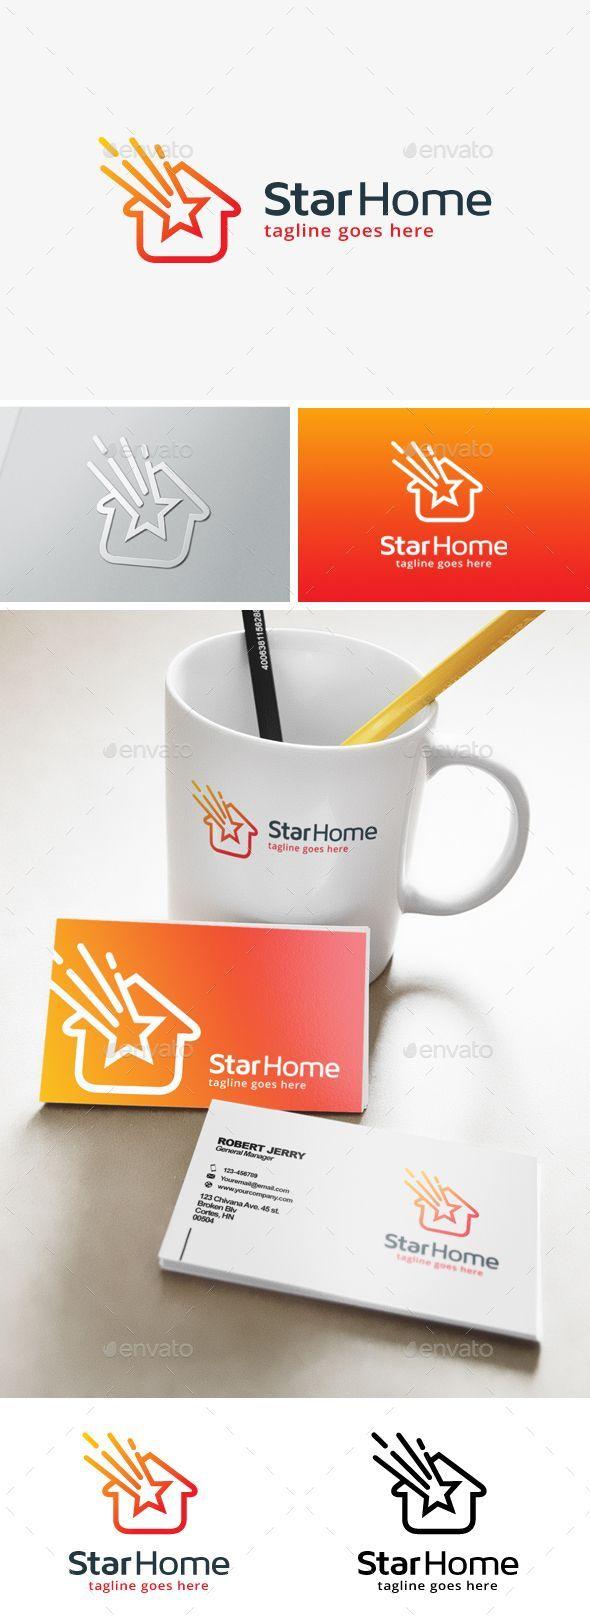 Star in House Logo - Star House Logo | Pinterest | House logos, Building logo and Logos